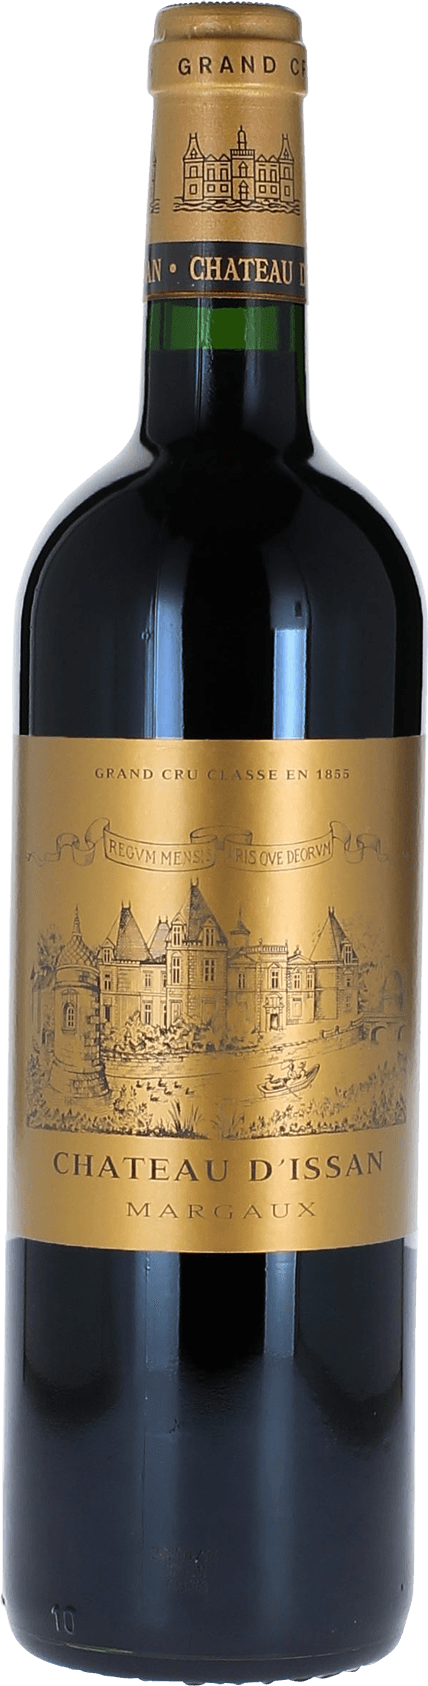 Issan 1988 3me Grand cru class Margaux, Bordeaux rouge